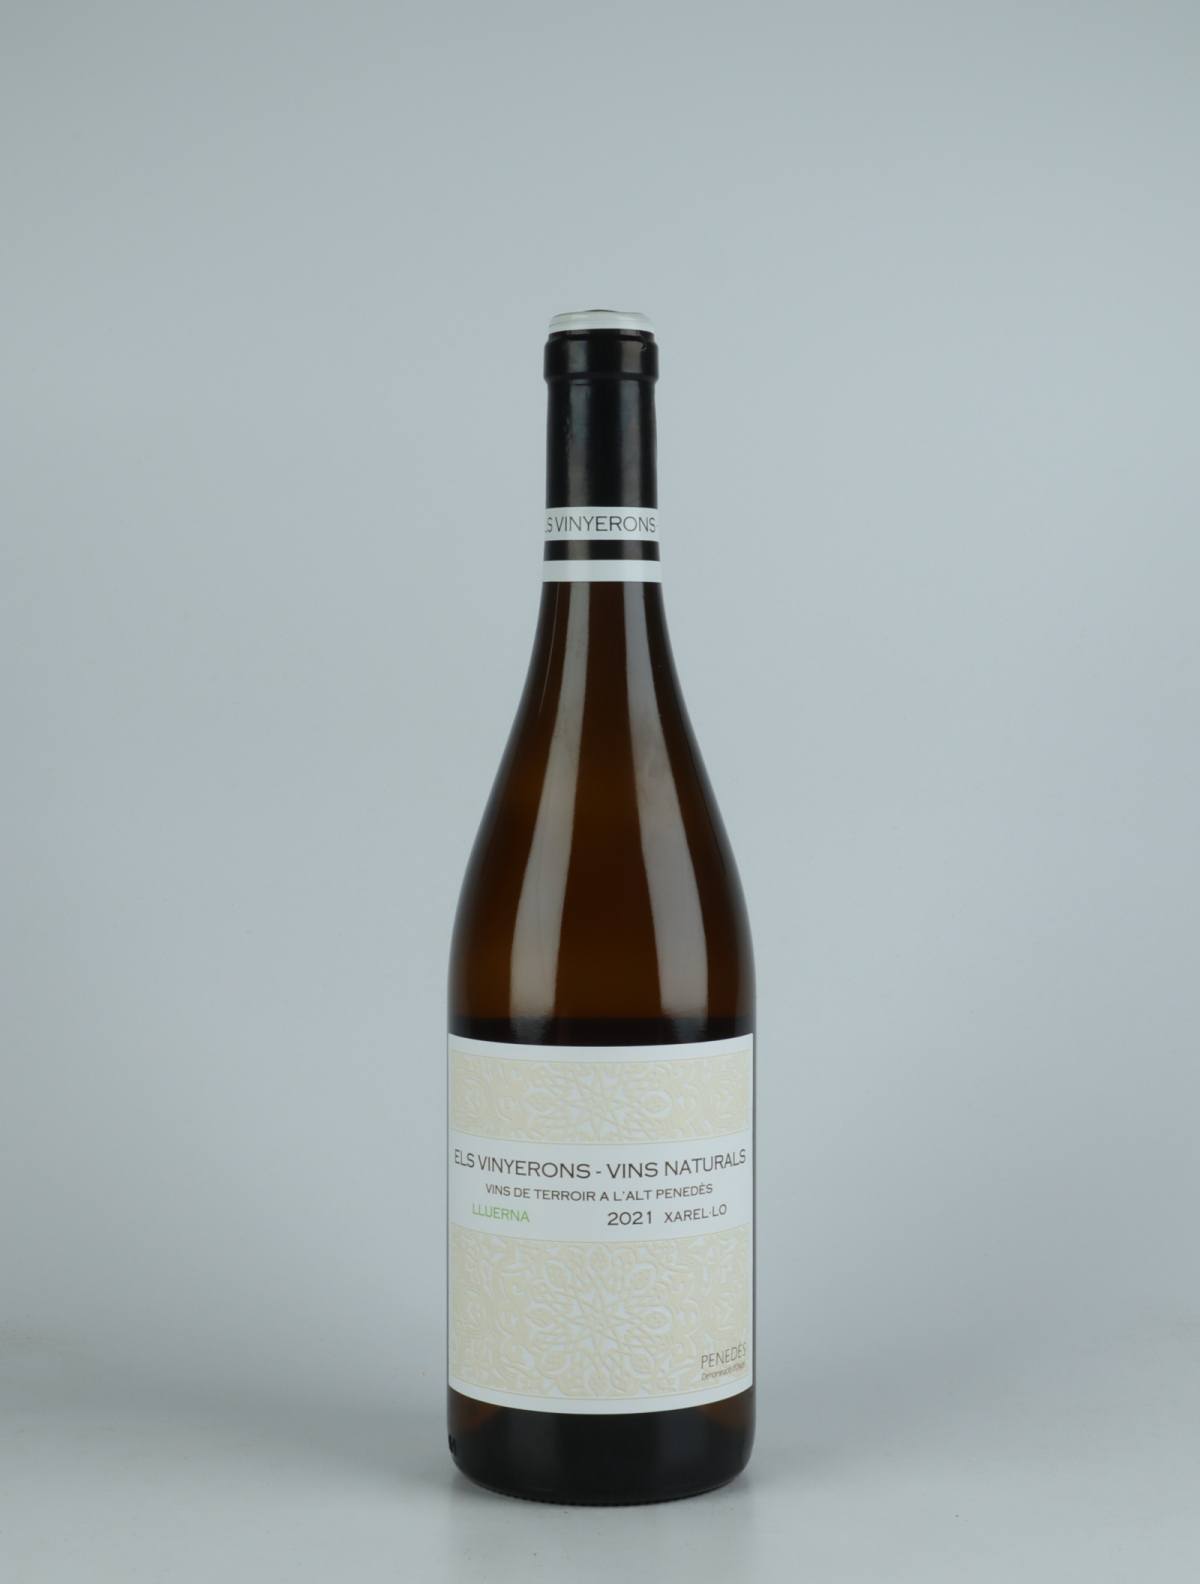 A bottle 2021 Lluerna White wine from Els Vinyerons, Penedès in Spain